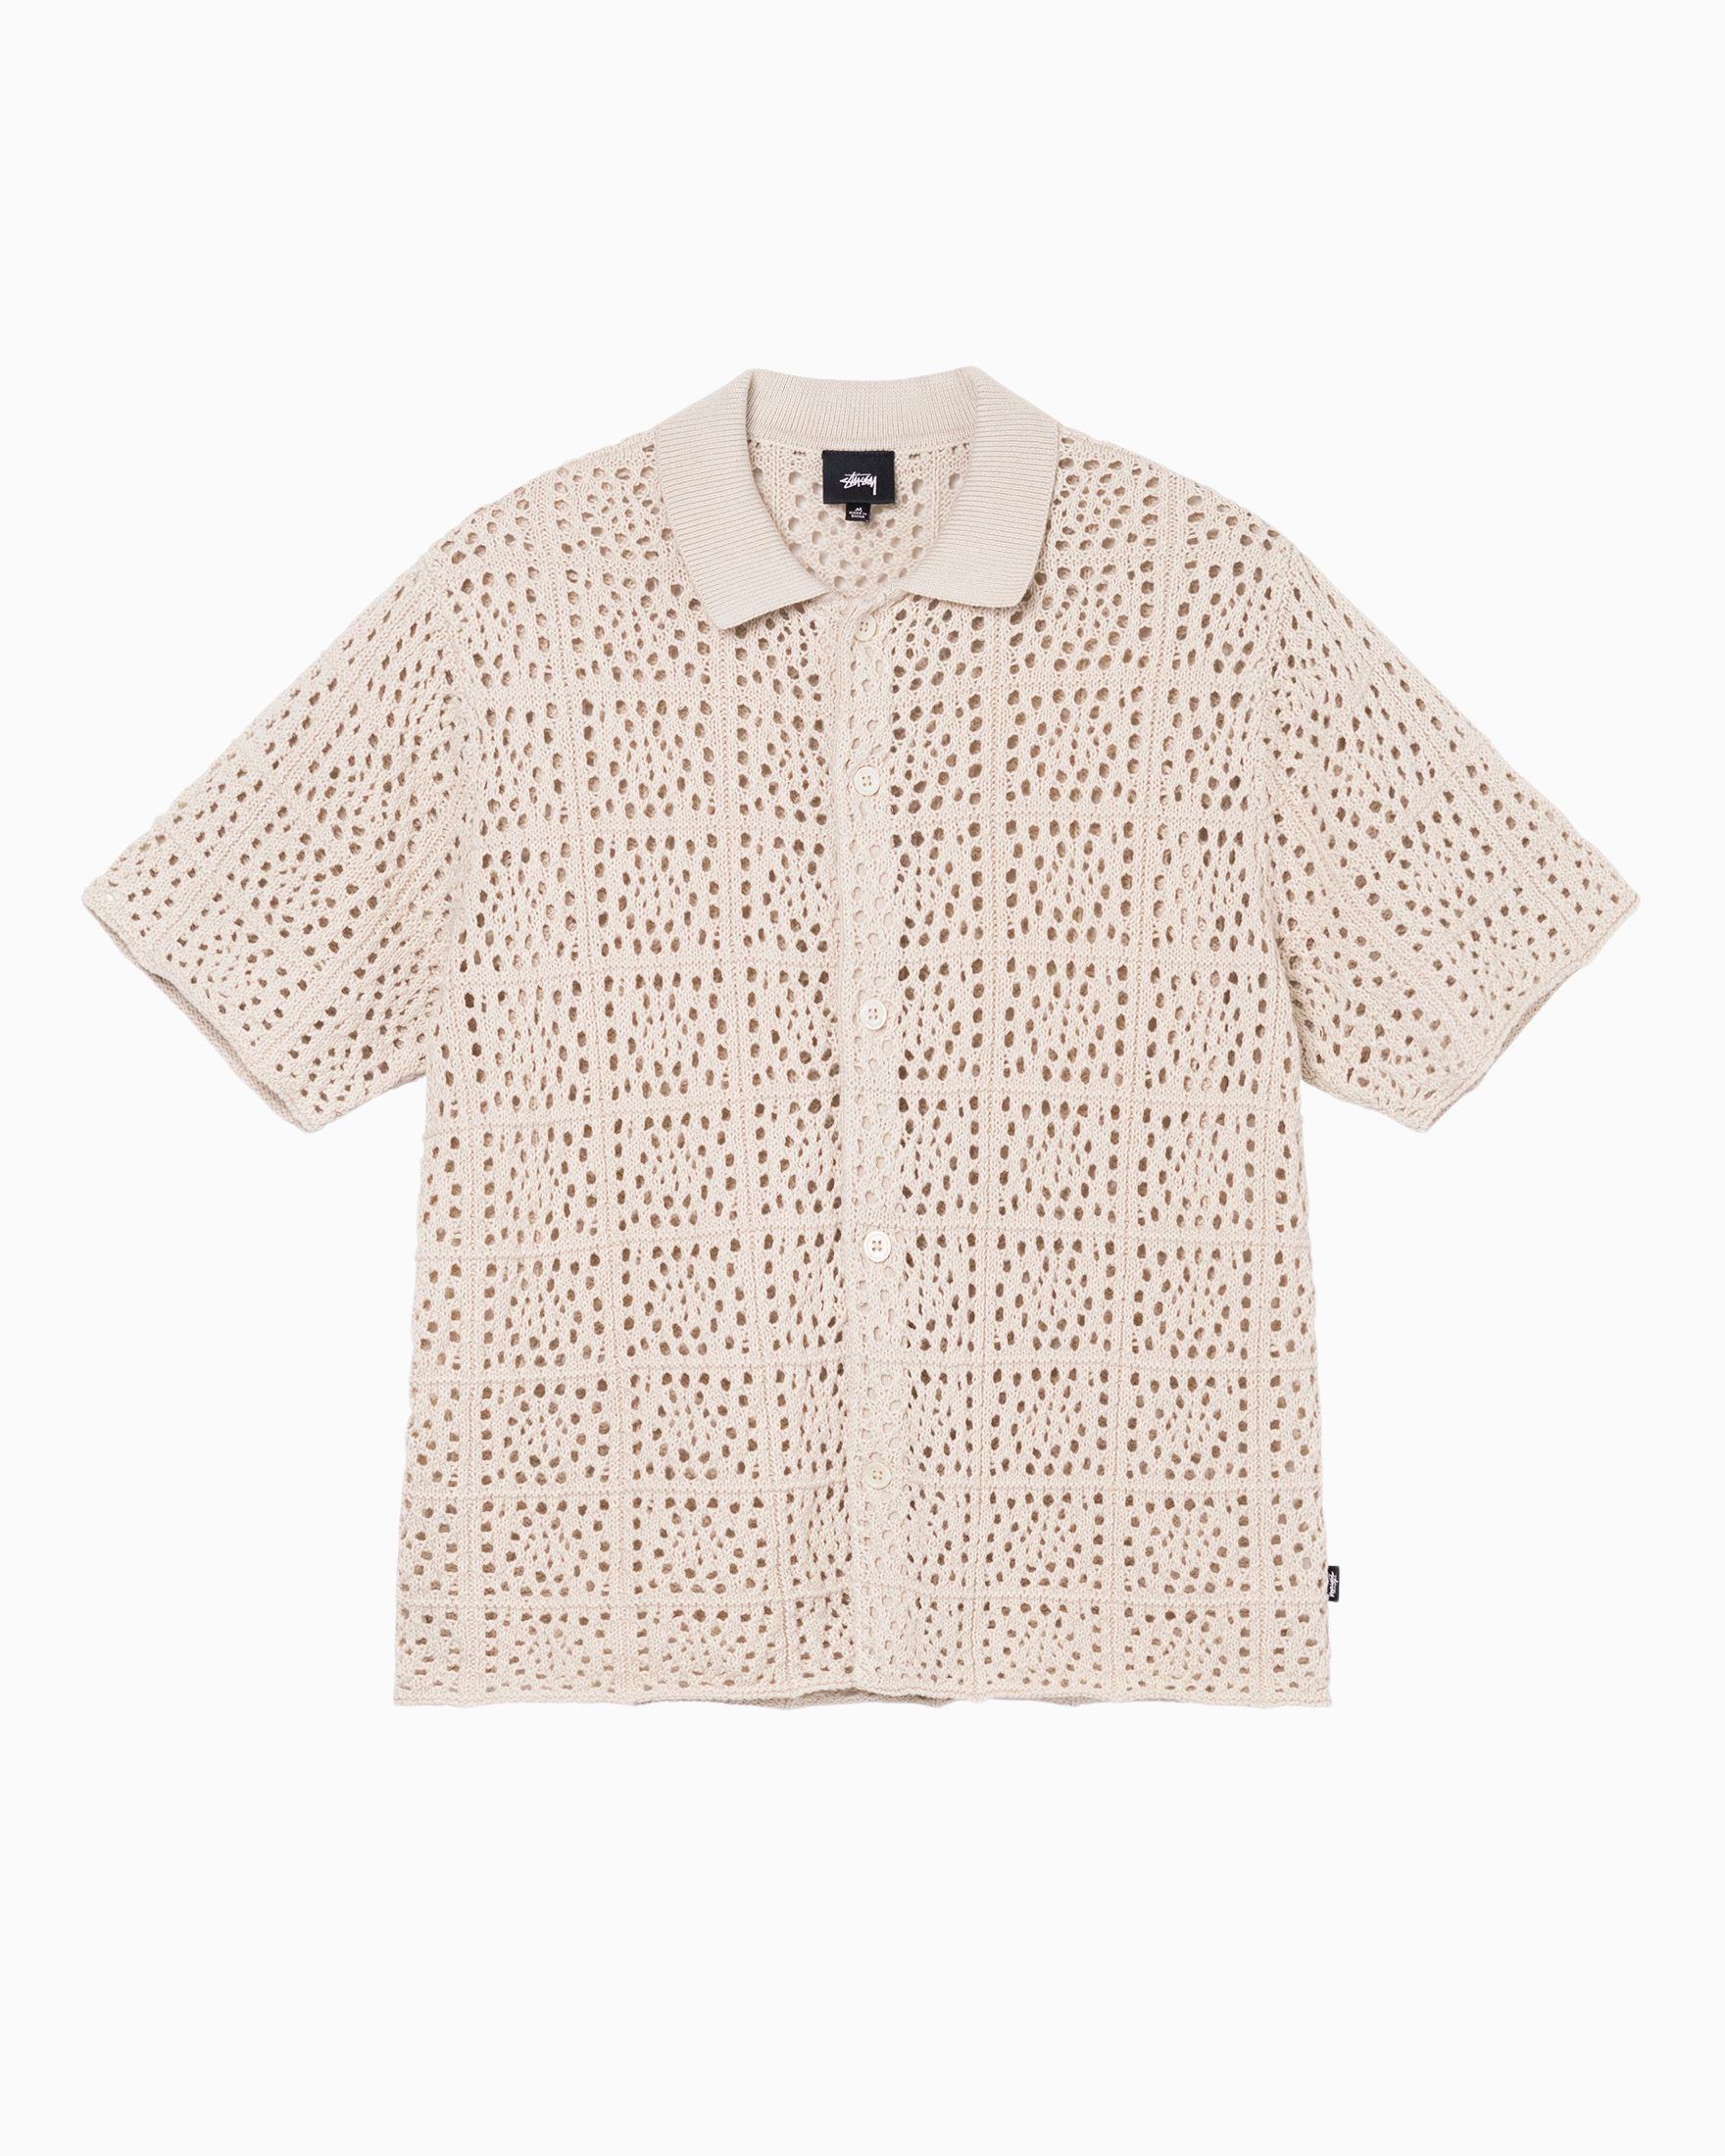 Crochet Shirt Stüssy Tops Shirts White